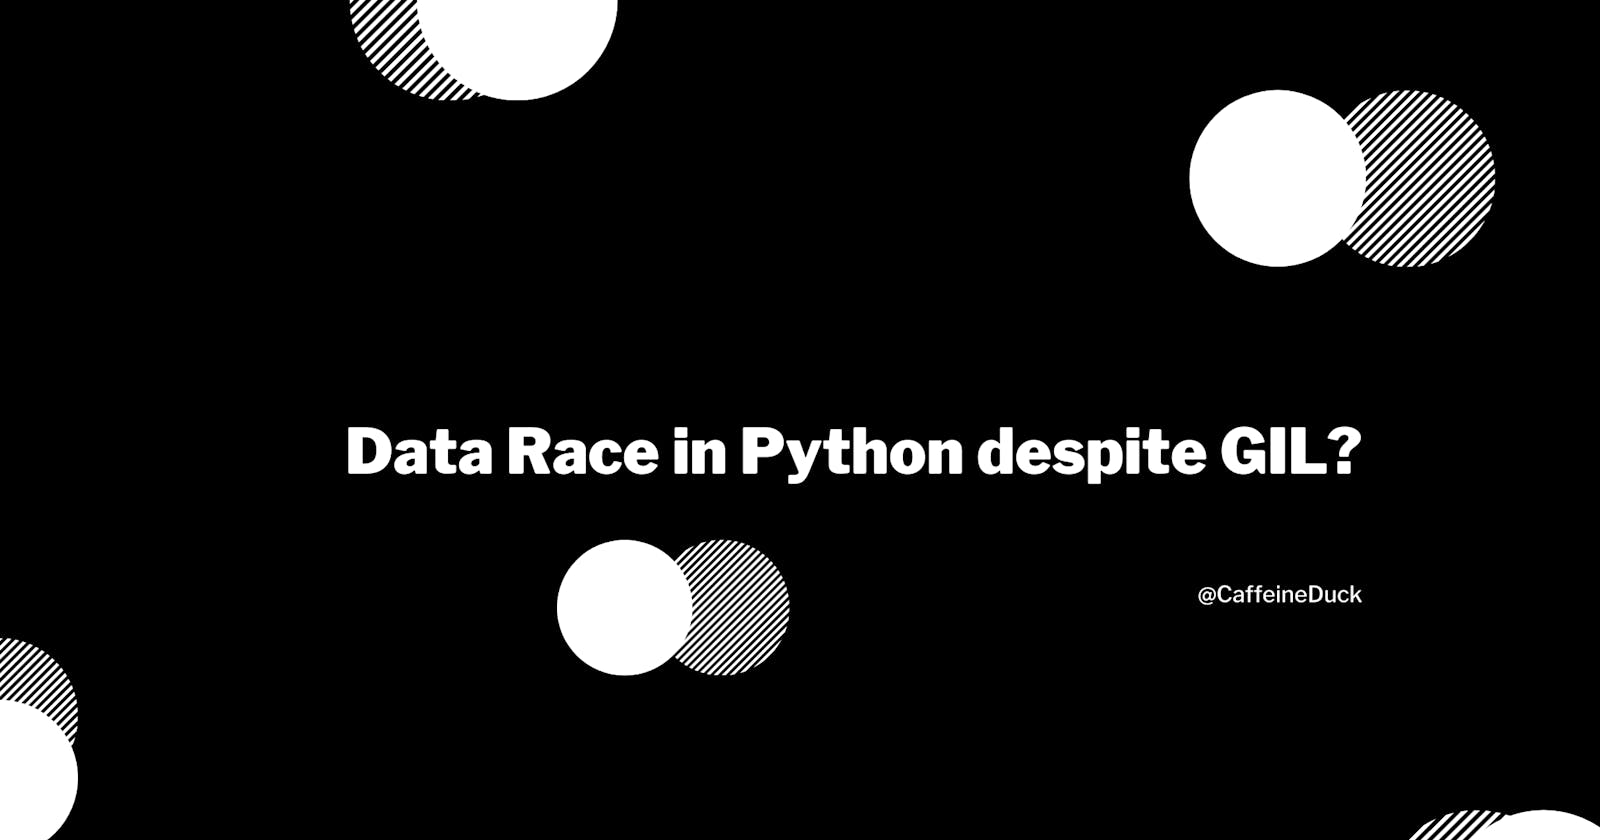 Data Race in Python despite GIL?